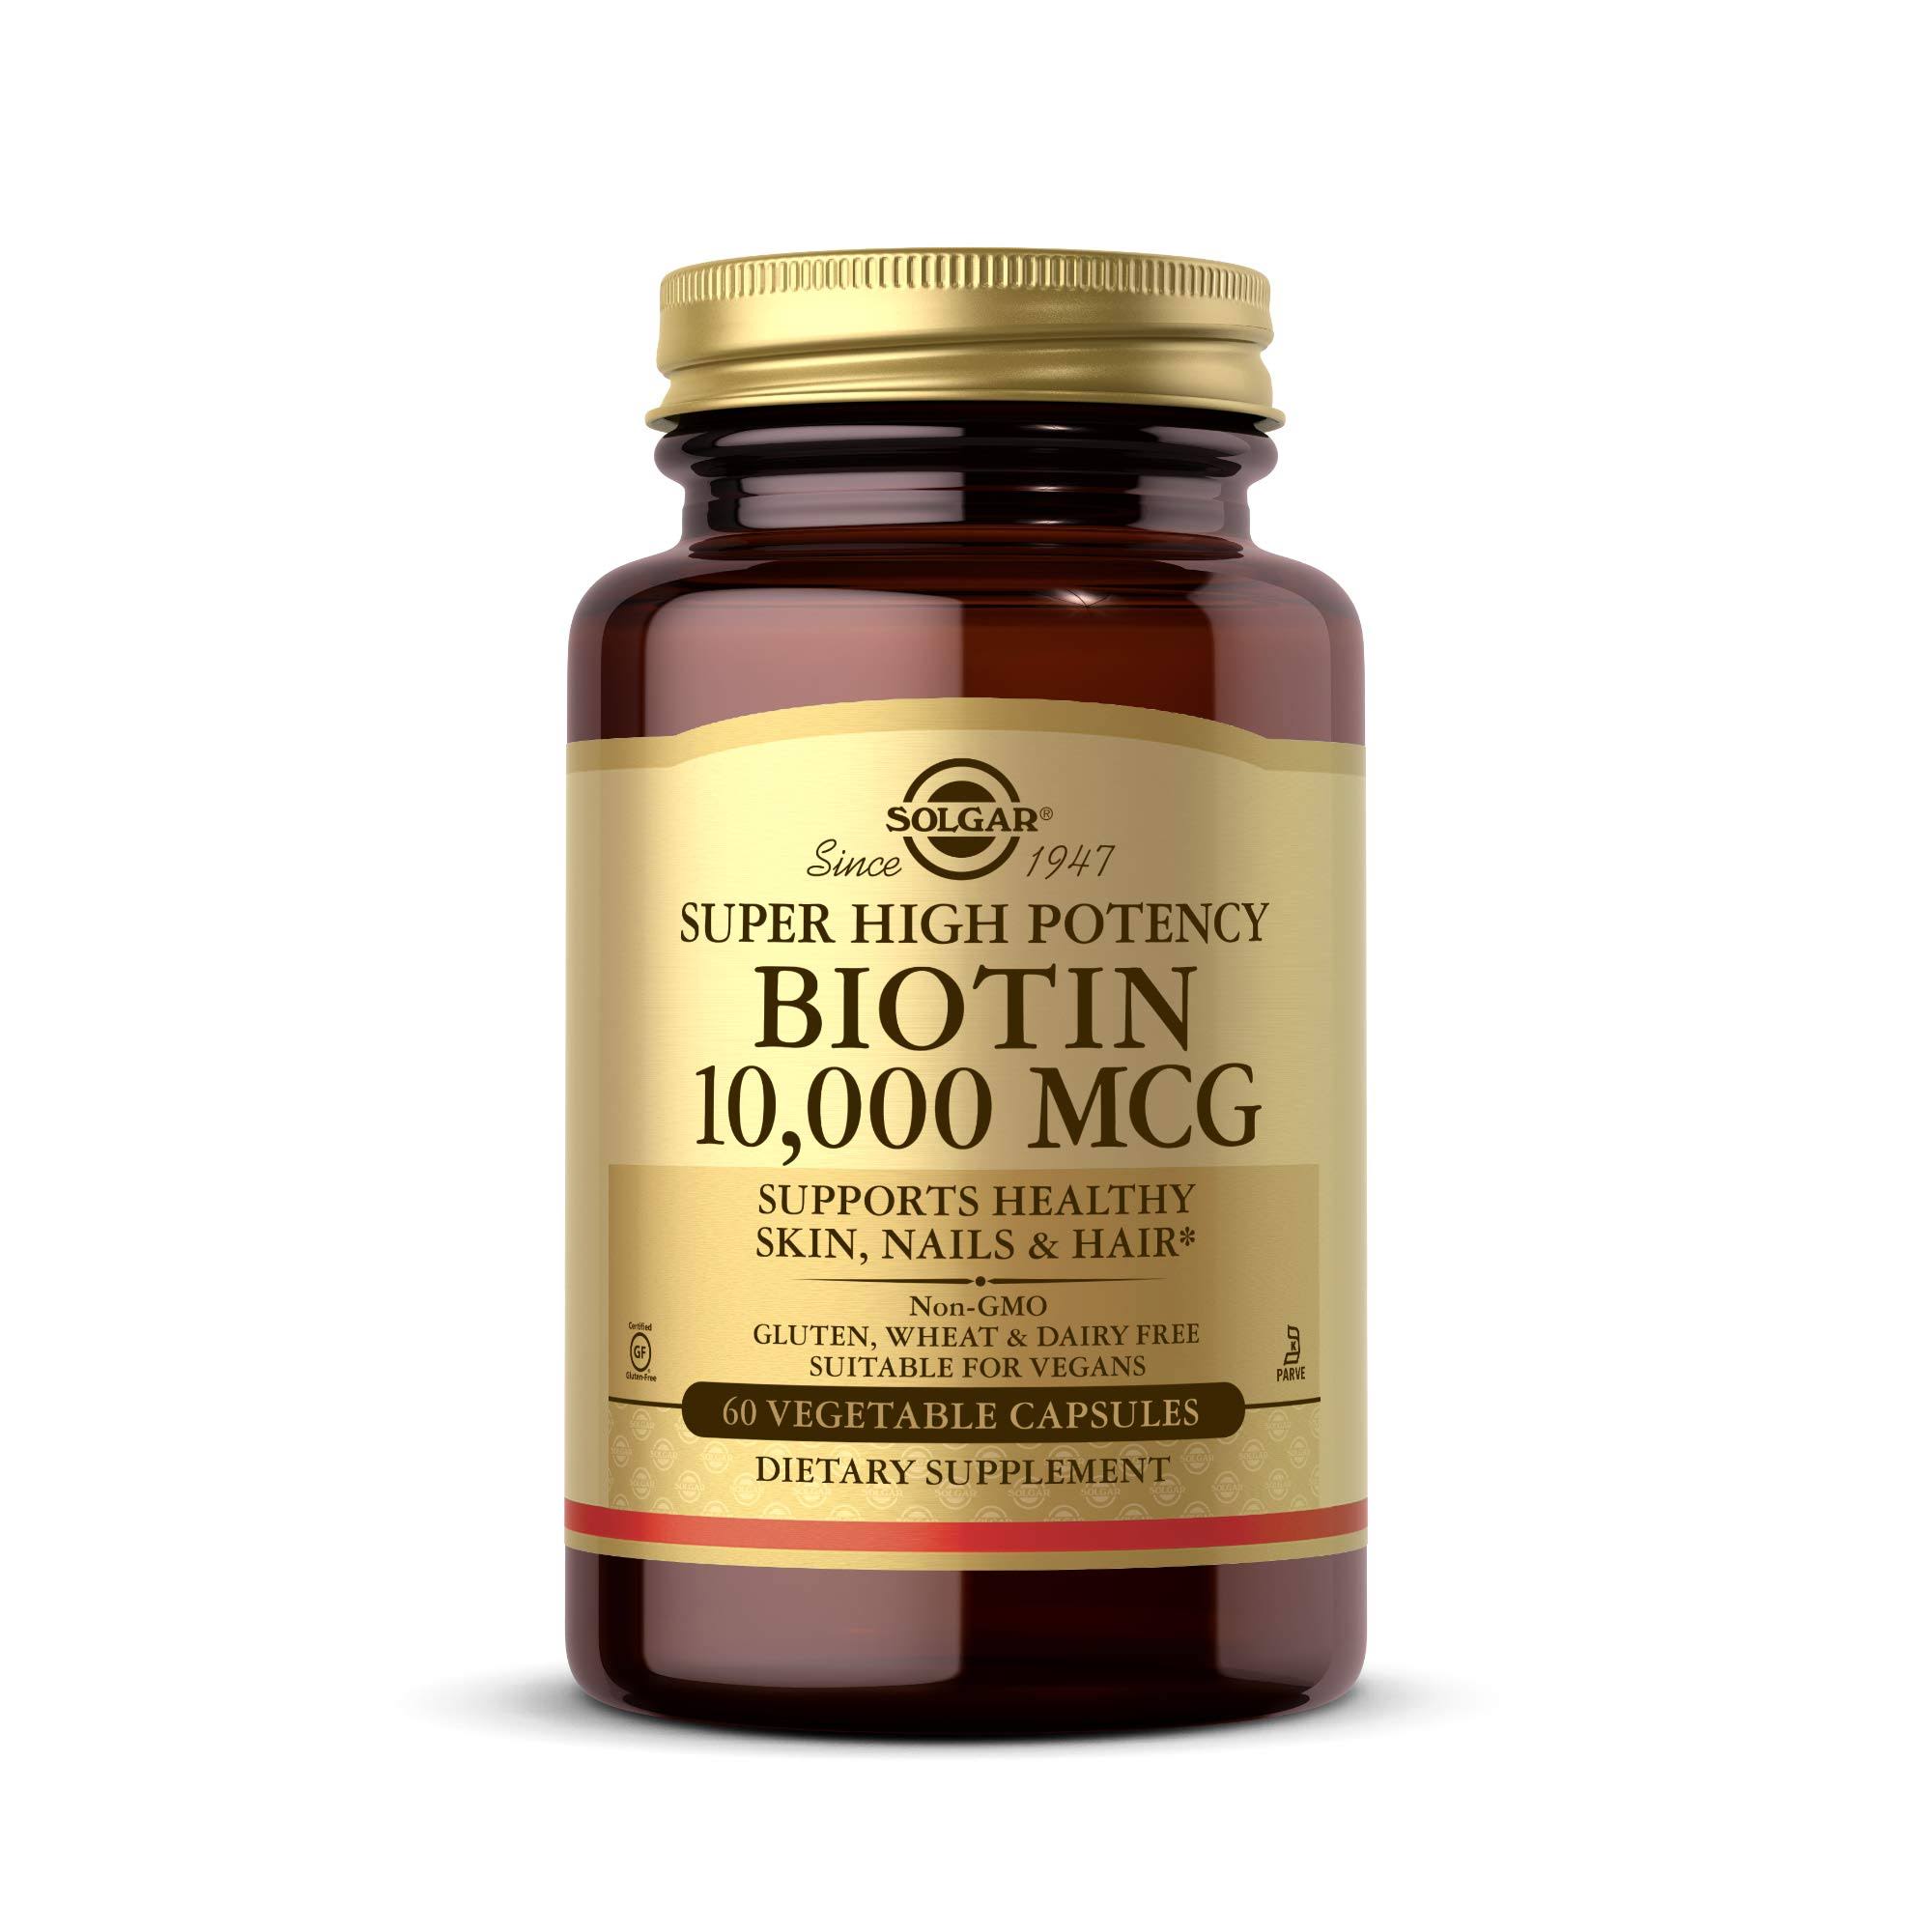 Solgar Biotin 10,000 MCG - 60 Vegetable Capsules